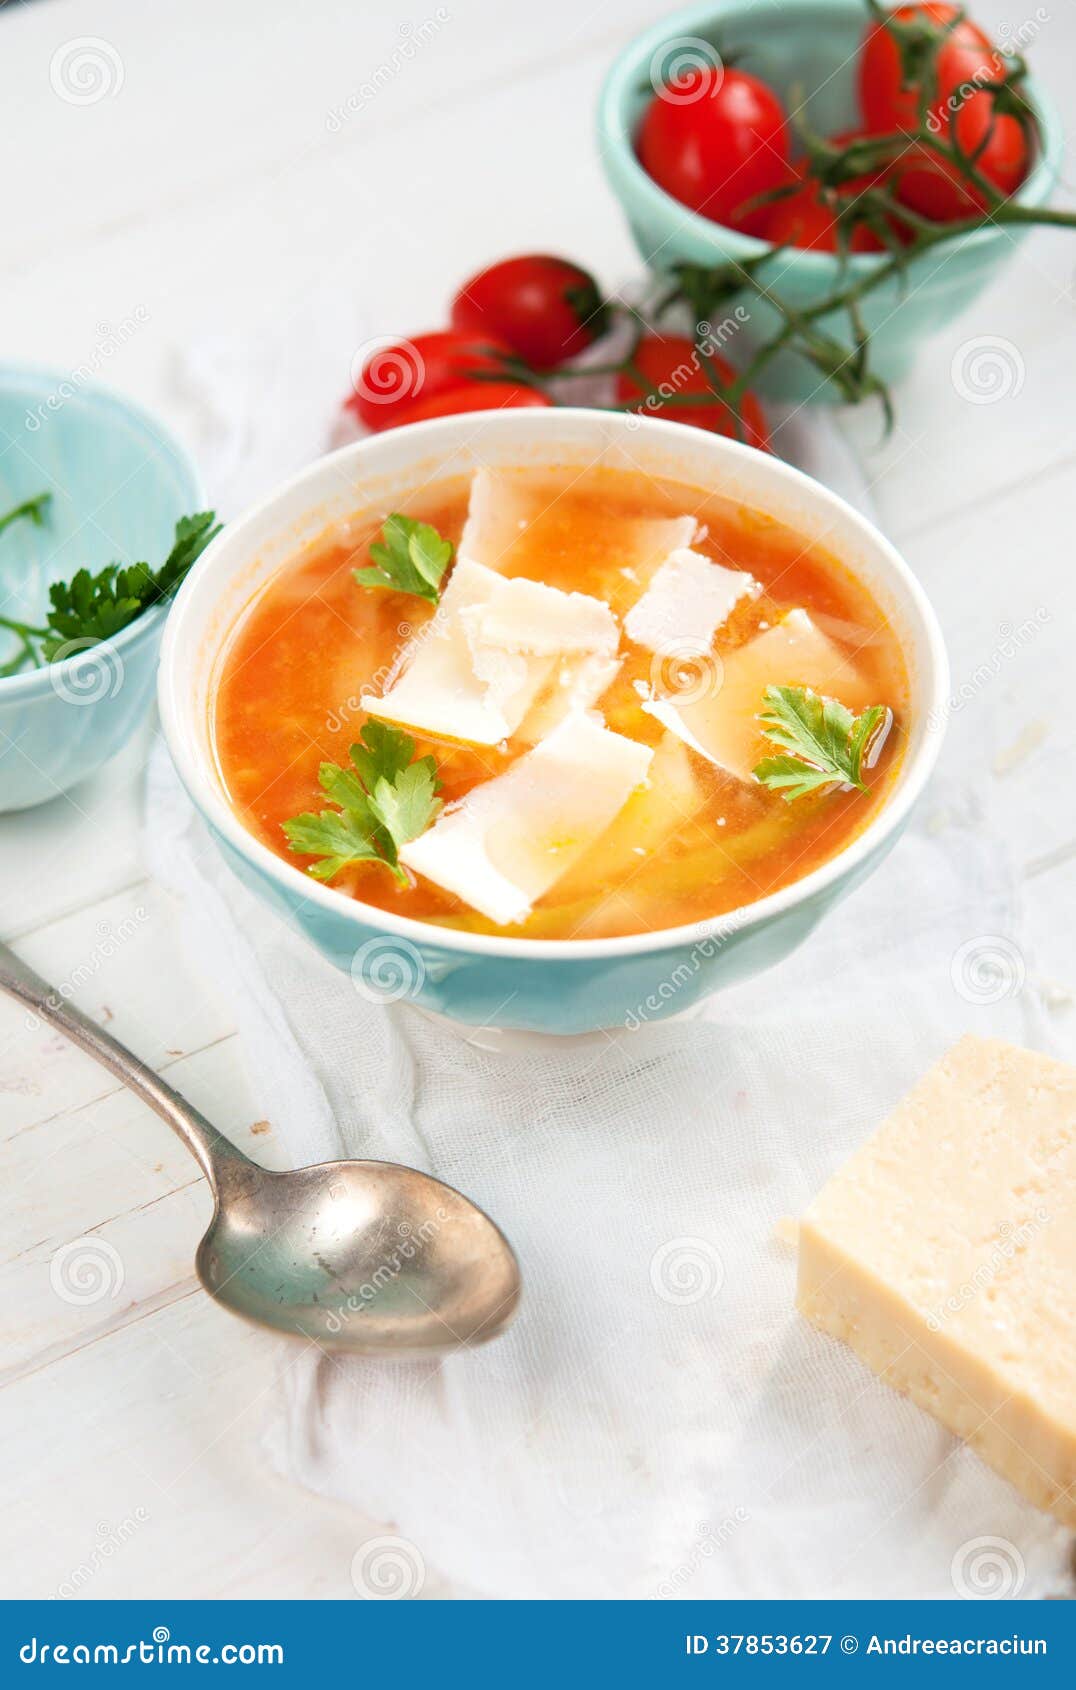 Lentil minestrone soup stock image. Image of vegetable - 37853627